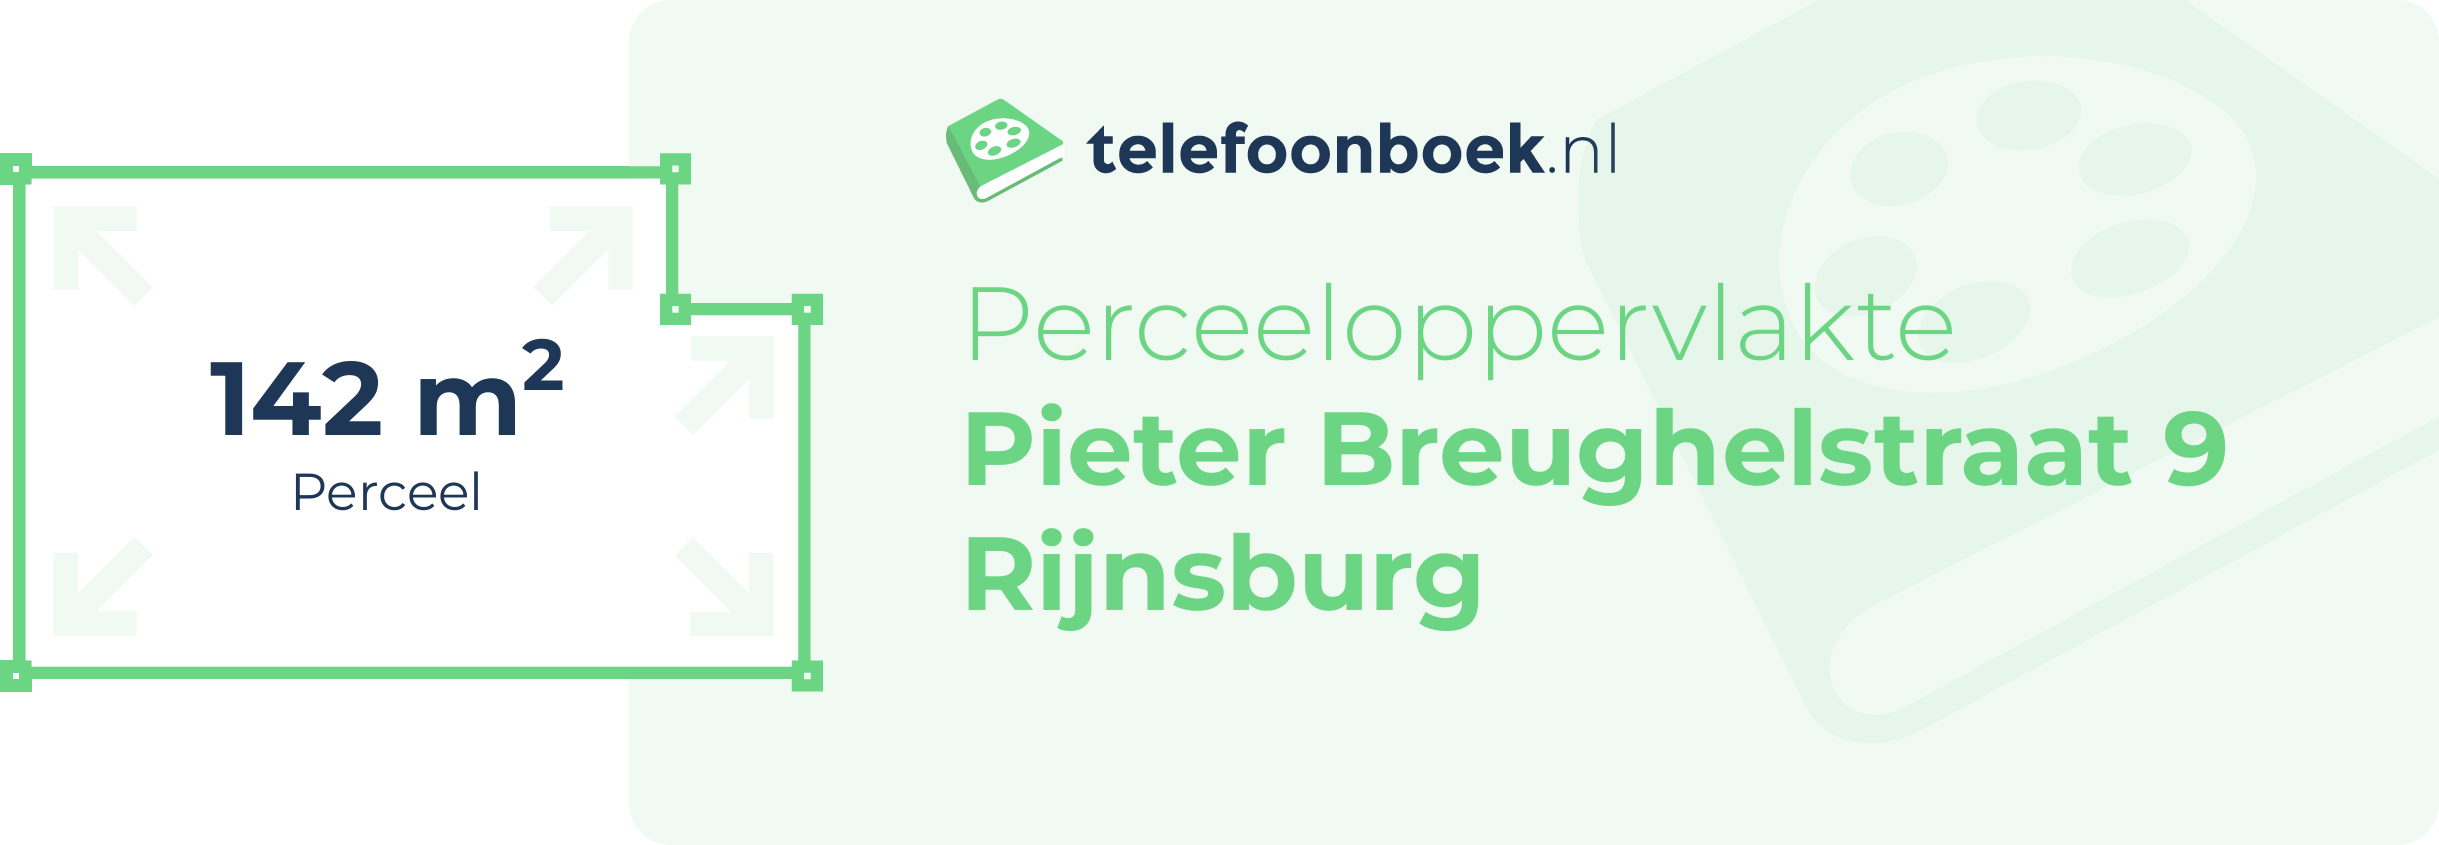 Perceeloppervlakte Pieter Breughelstraat 9 Rijnsburg